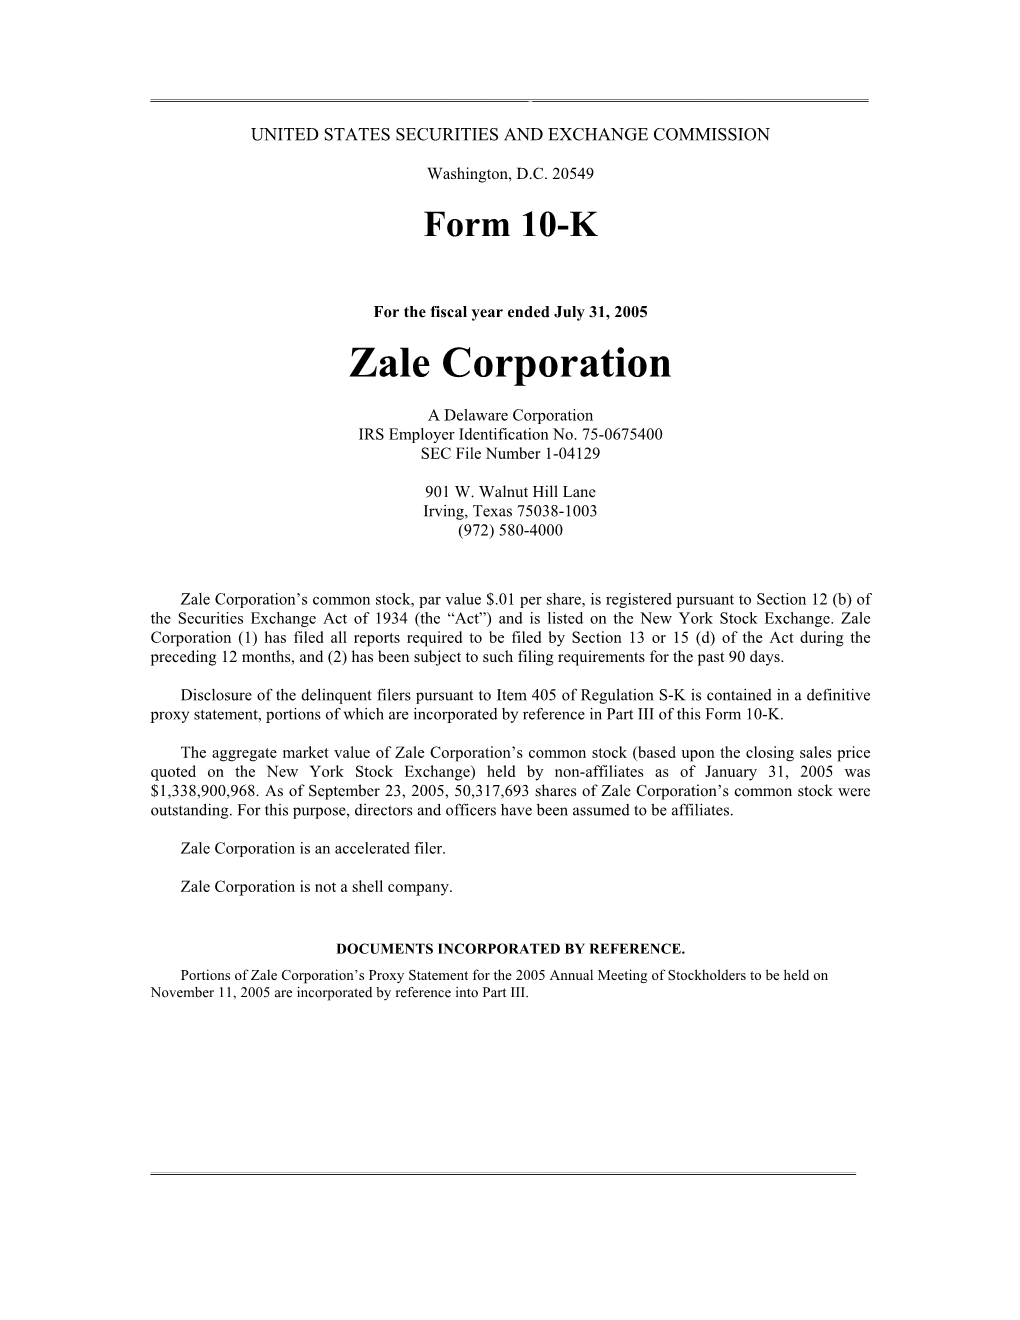 Zale Corporation